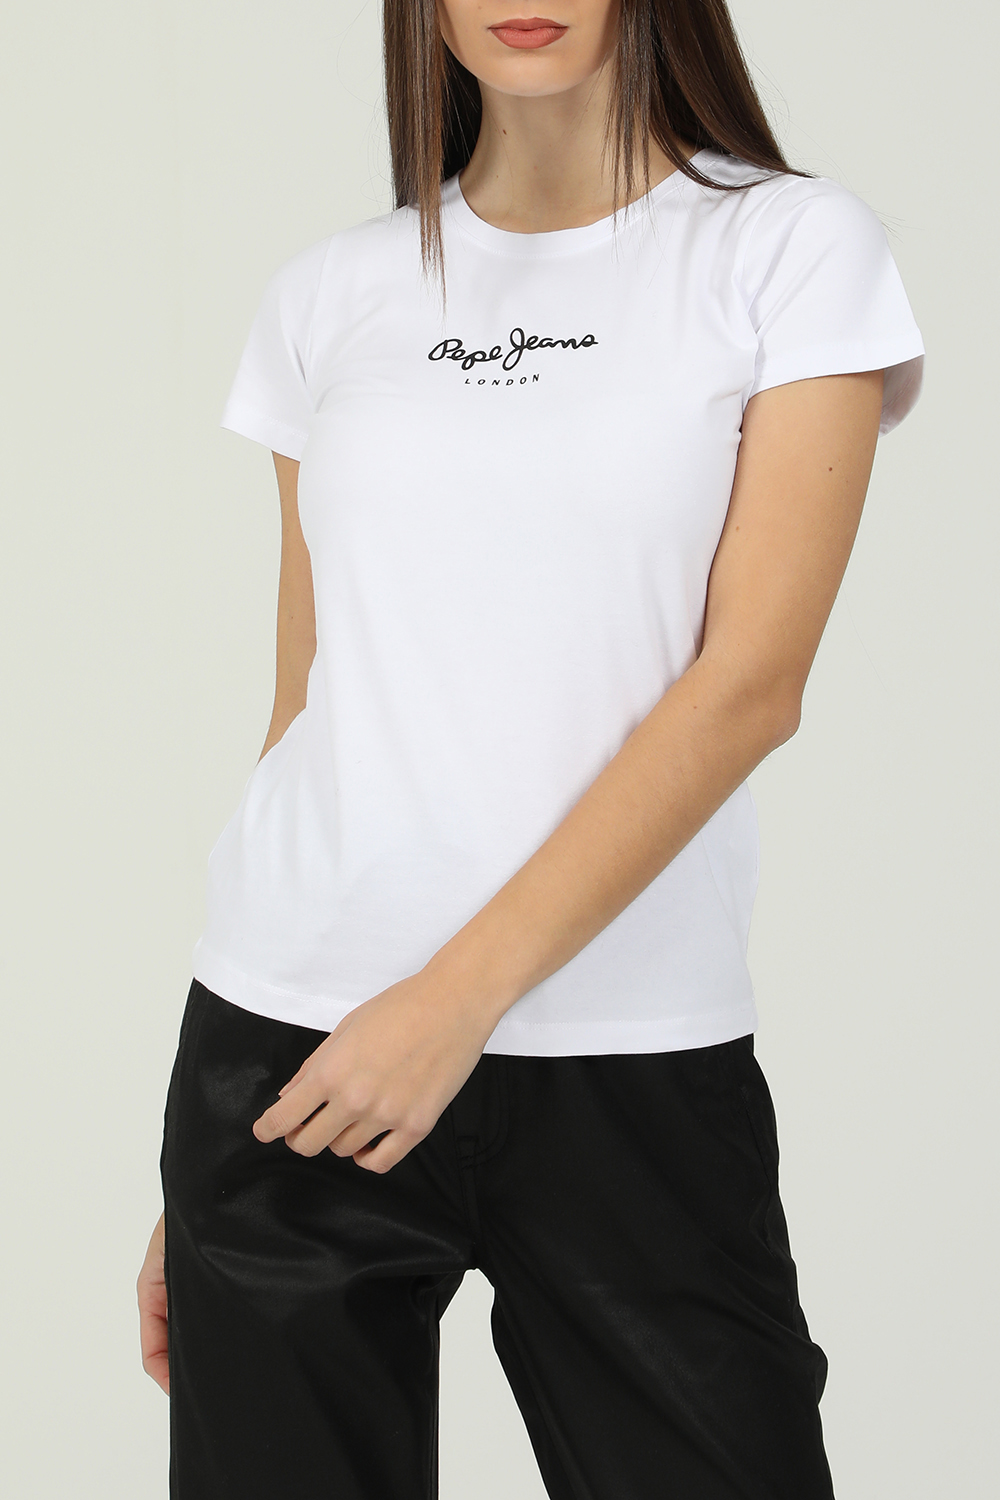 PEPE JEANS – Γυναικεία κοντομάνικη μπλούζα PEPE JEANS NEW VIRGINIA λευκή 1822897.0-0091